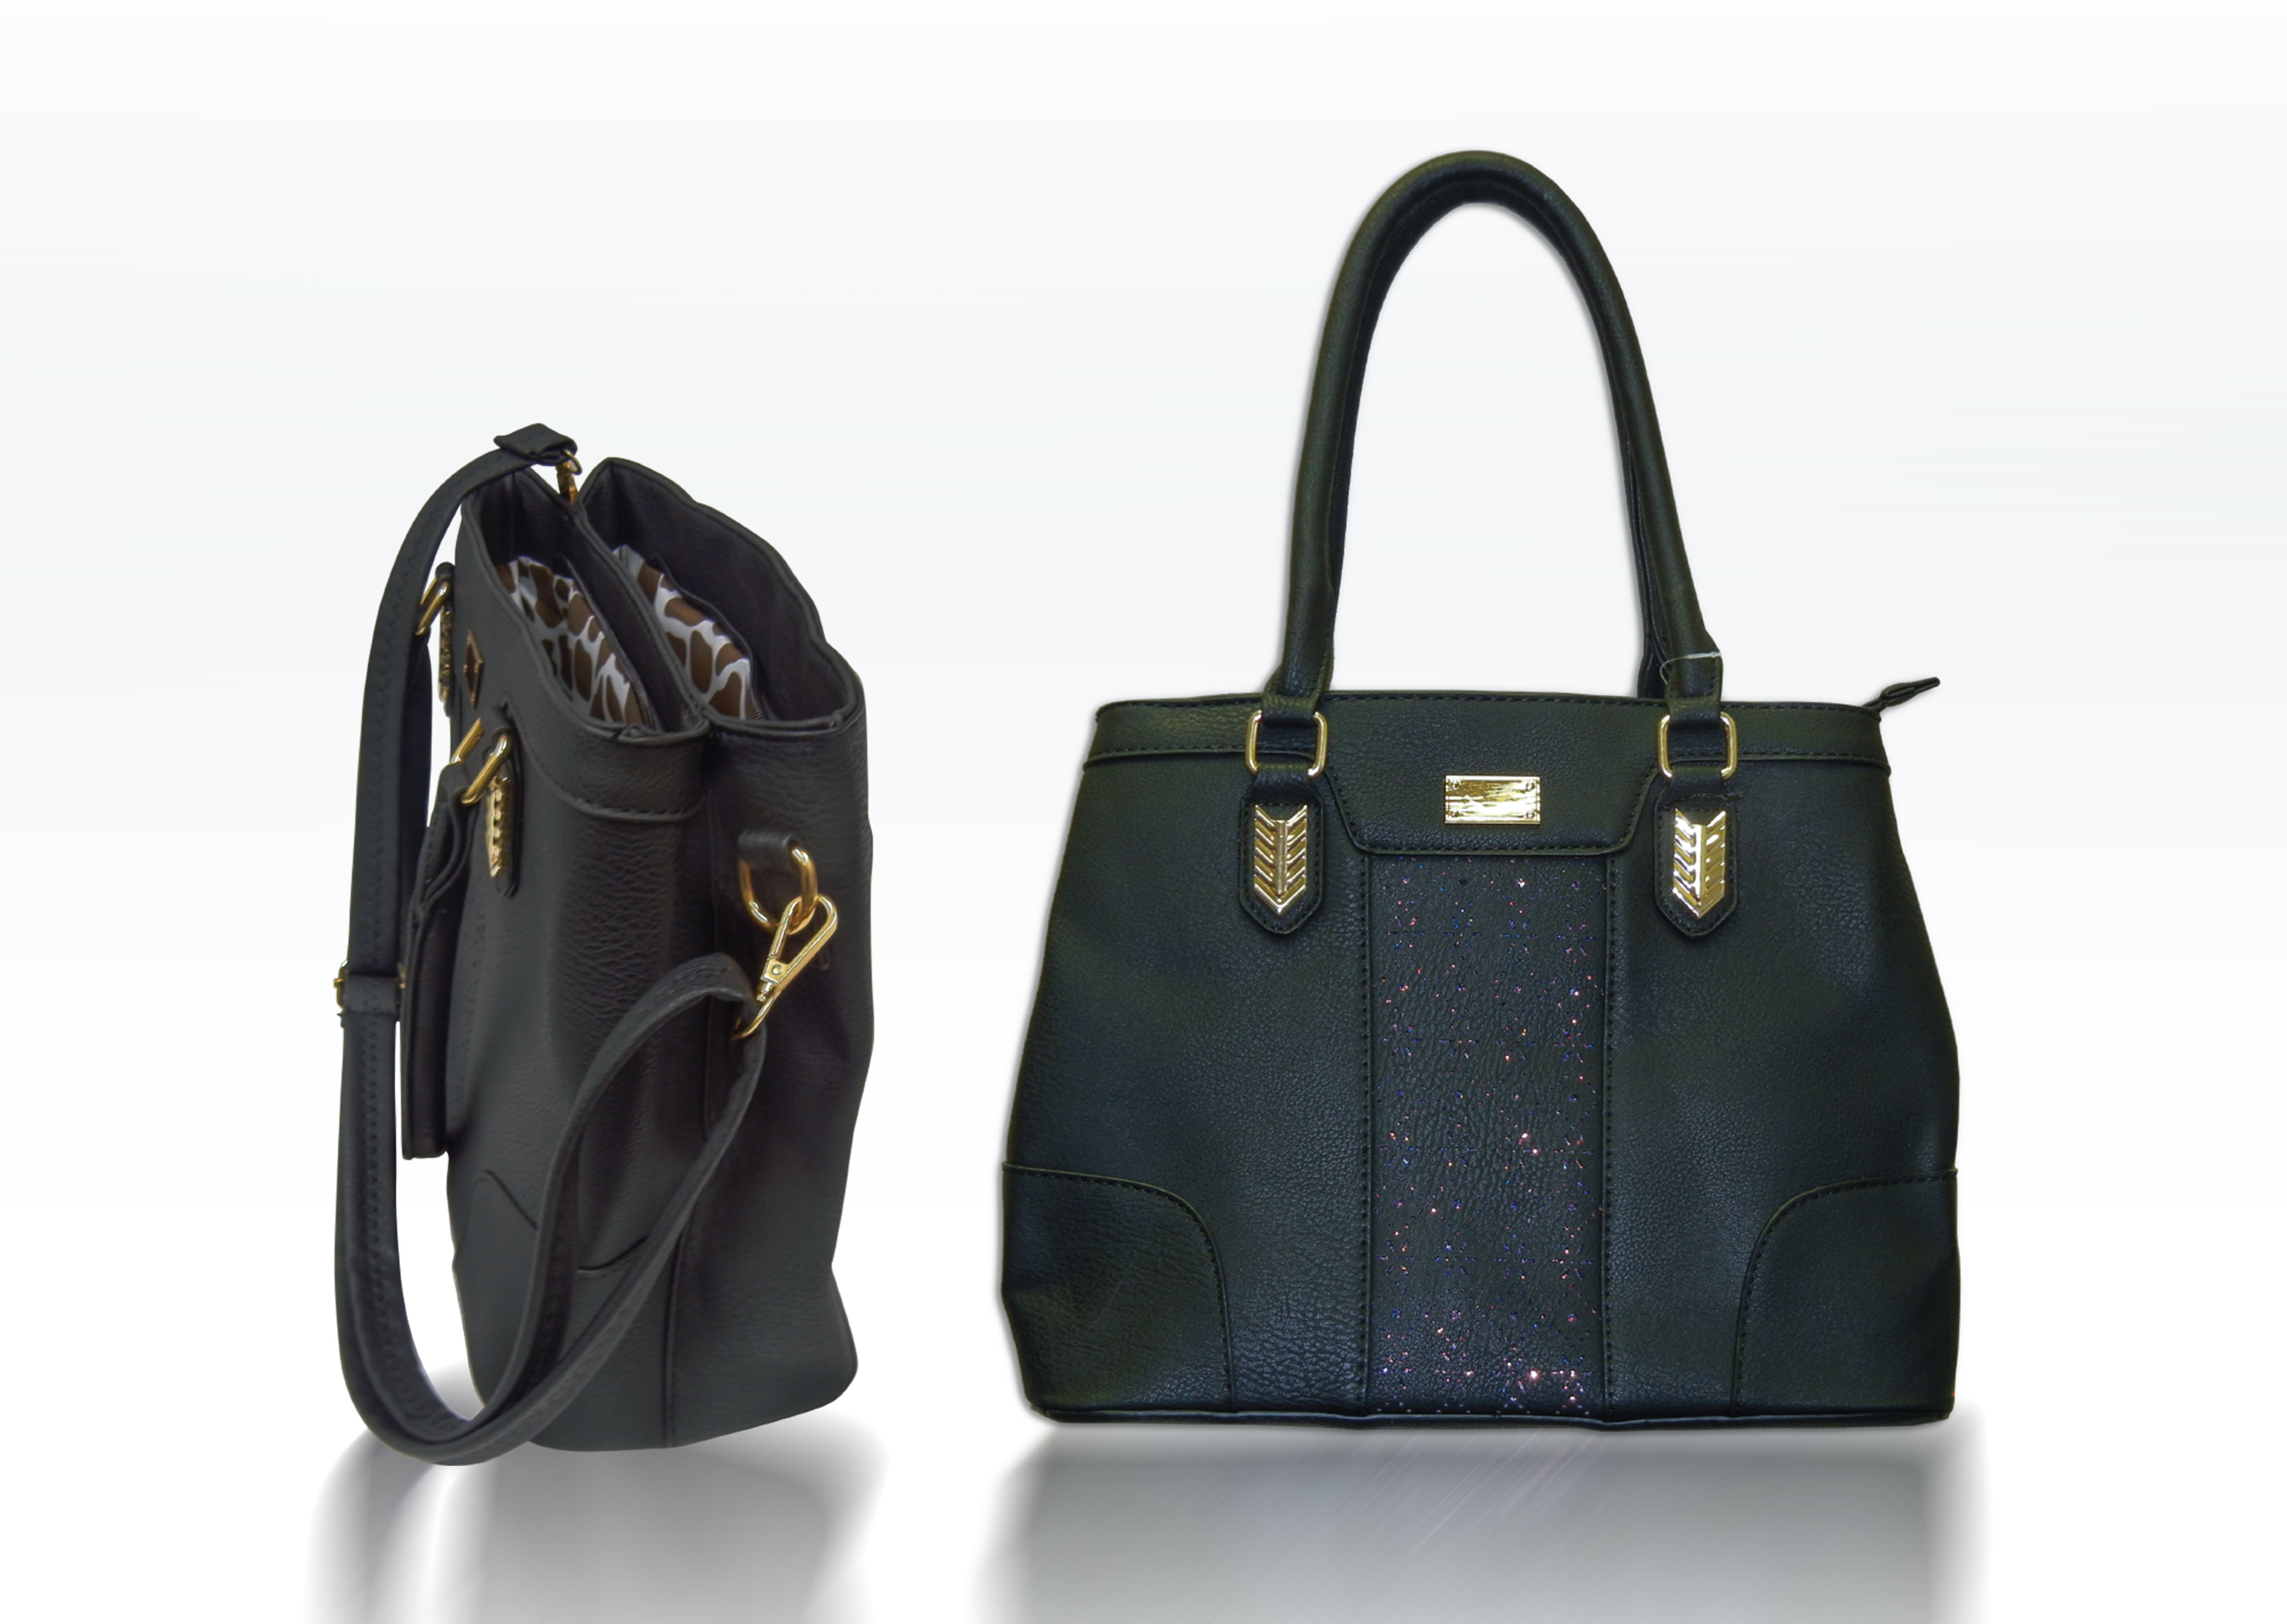 Black Ladies Handbag with removable straps